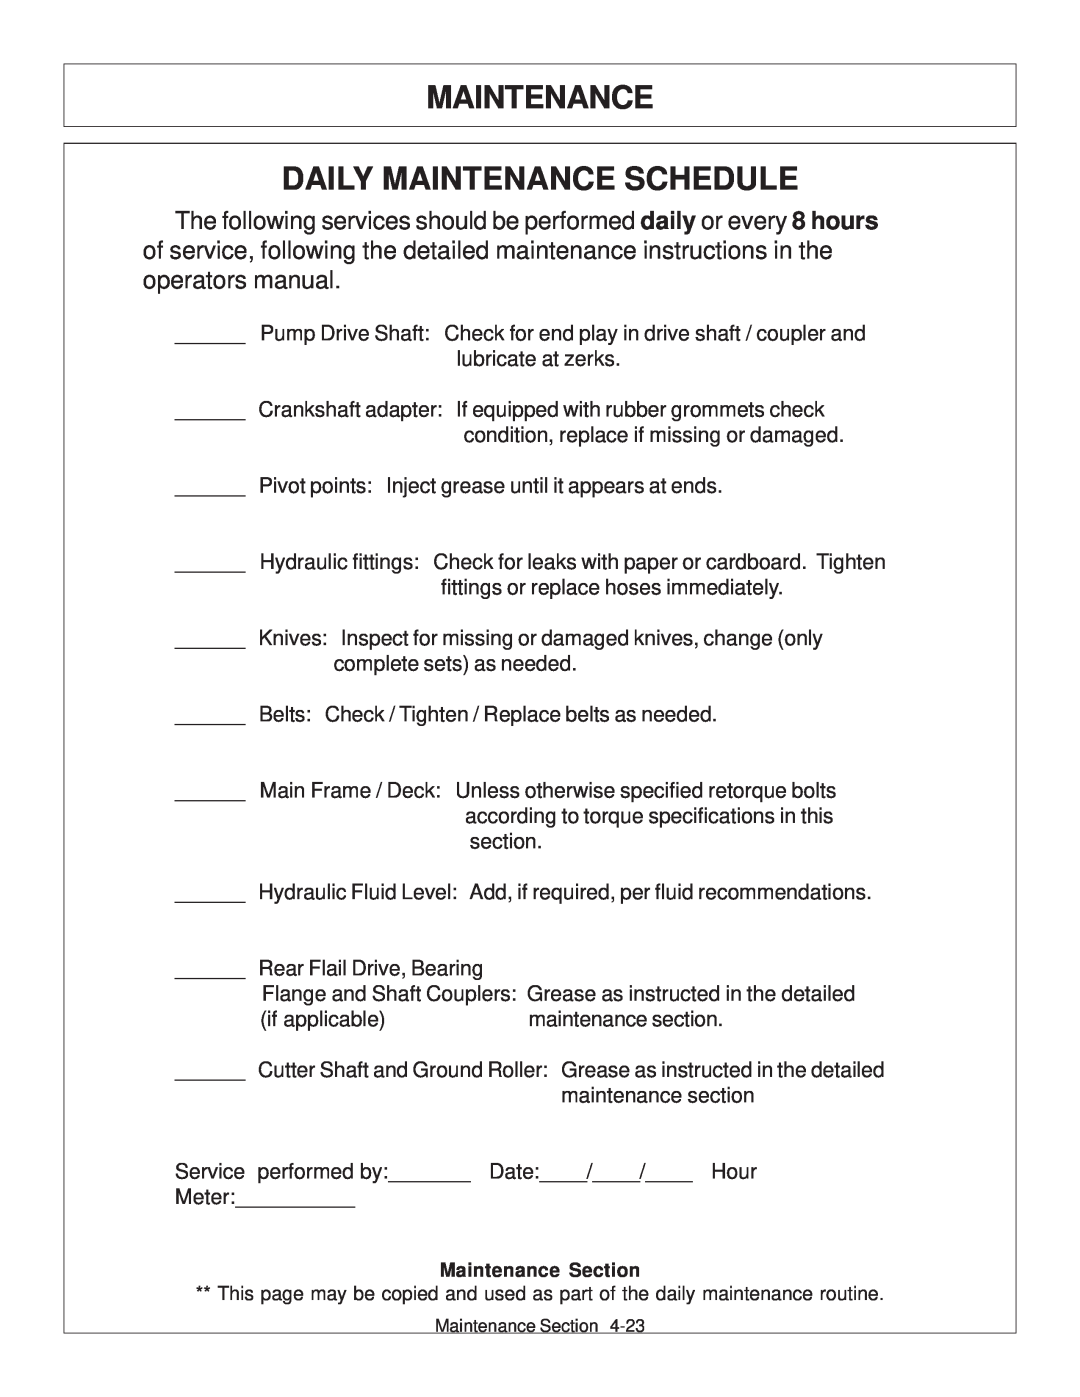 Tiger Products Co., Ltd TS 100A manual Maintenance Daily Maintenance Schedule, Maintenance Section 